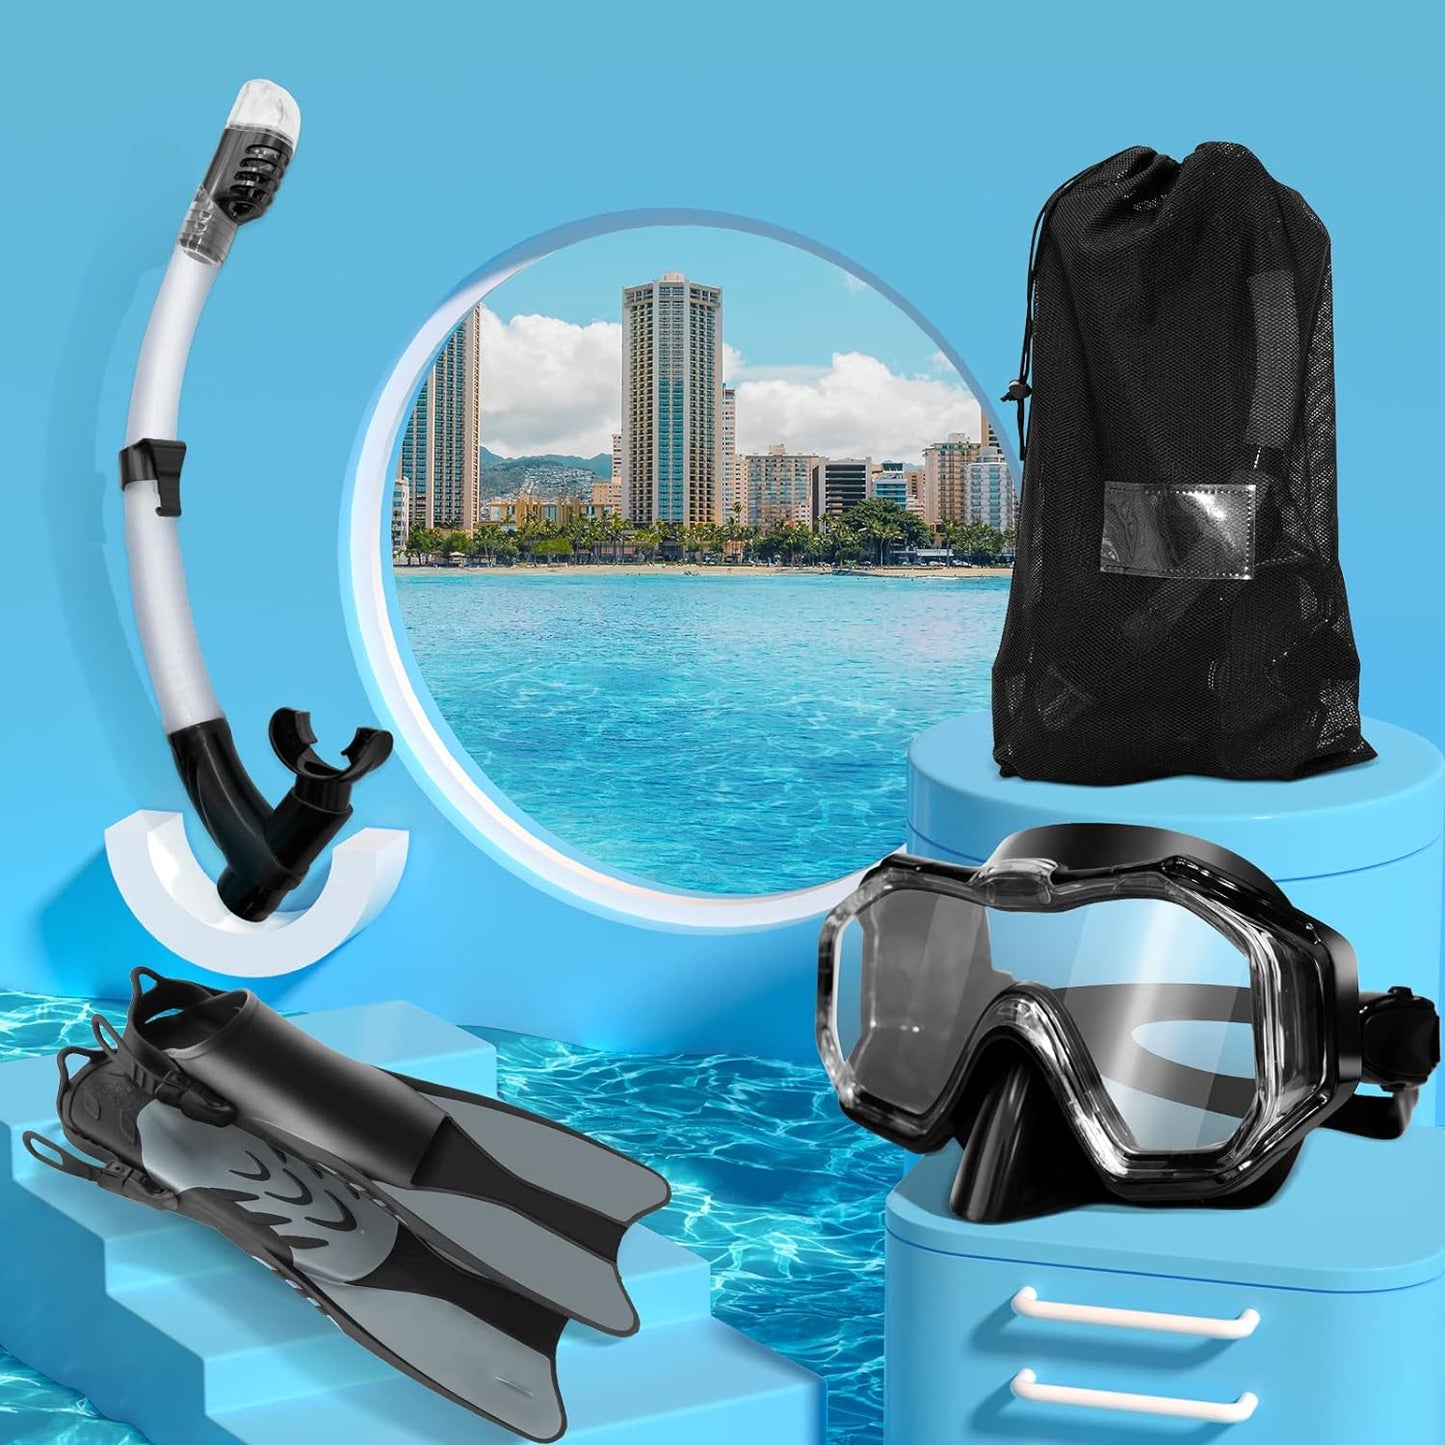 Snorkeling Gear,3 in 1 Mask Fins,180 View, Anti-Fog Anti-Leak, Dry Top Snorkel, Dive Flippers